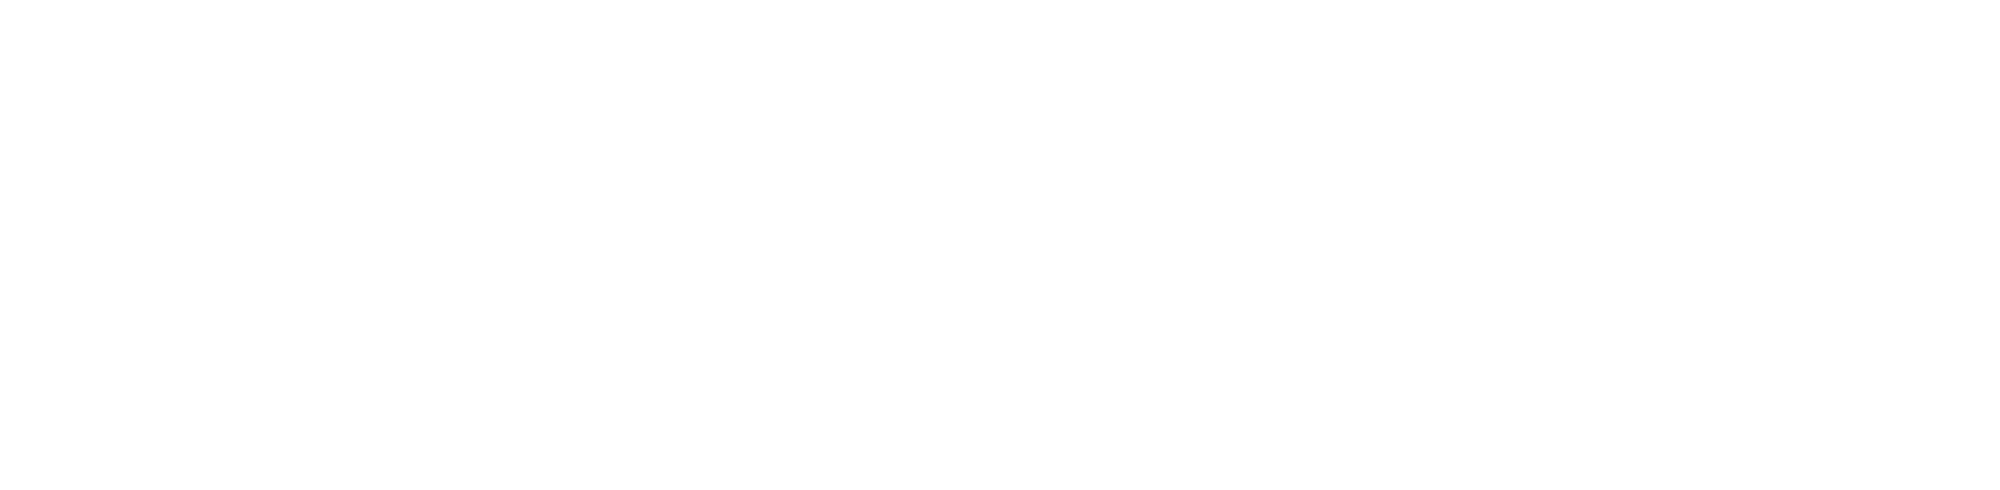 The Vision Center at Cascade Park Logo